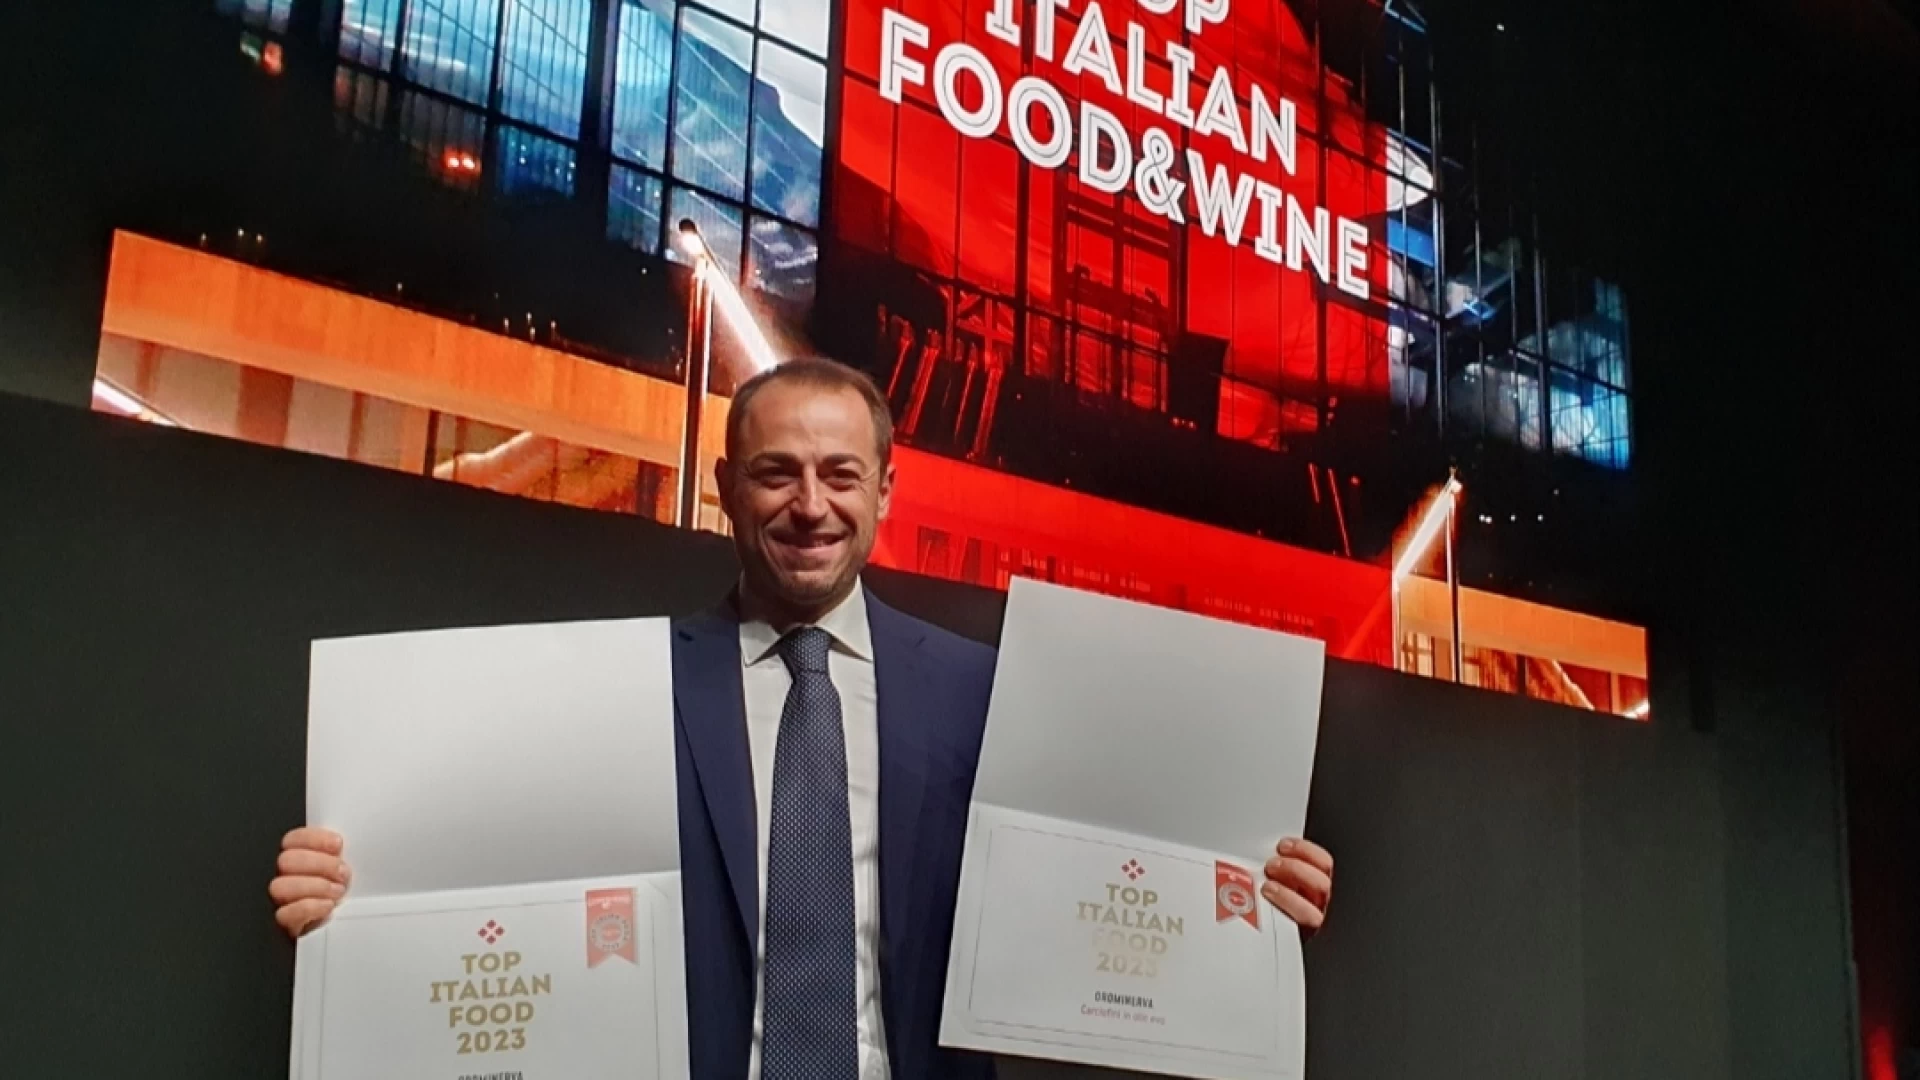 Top Italian Food 2023: premiati i carciofini e la passata Orominerva.